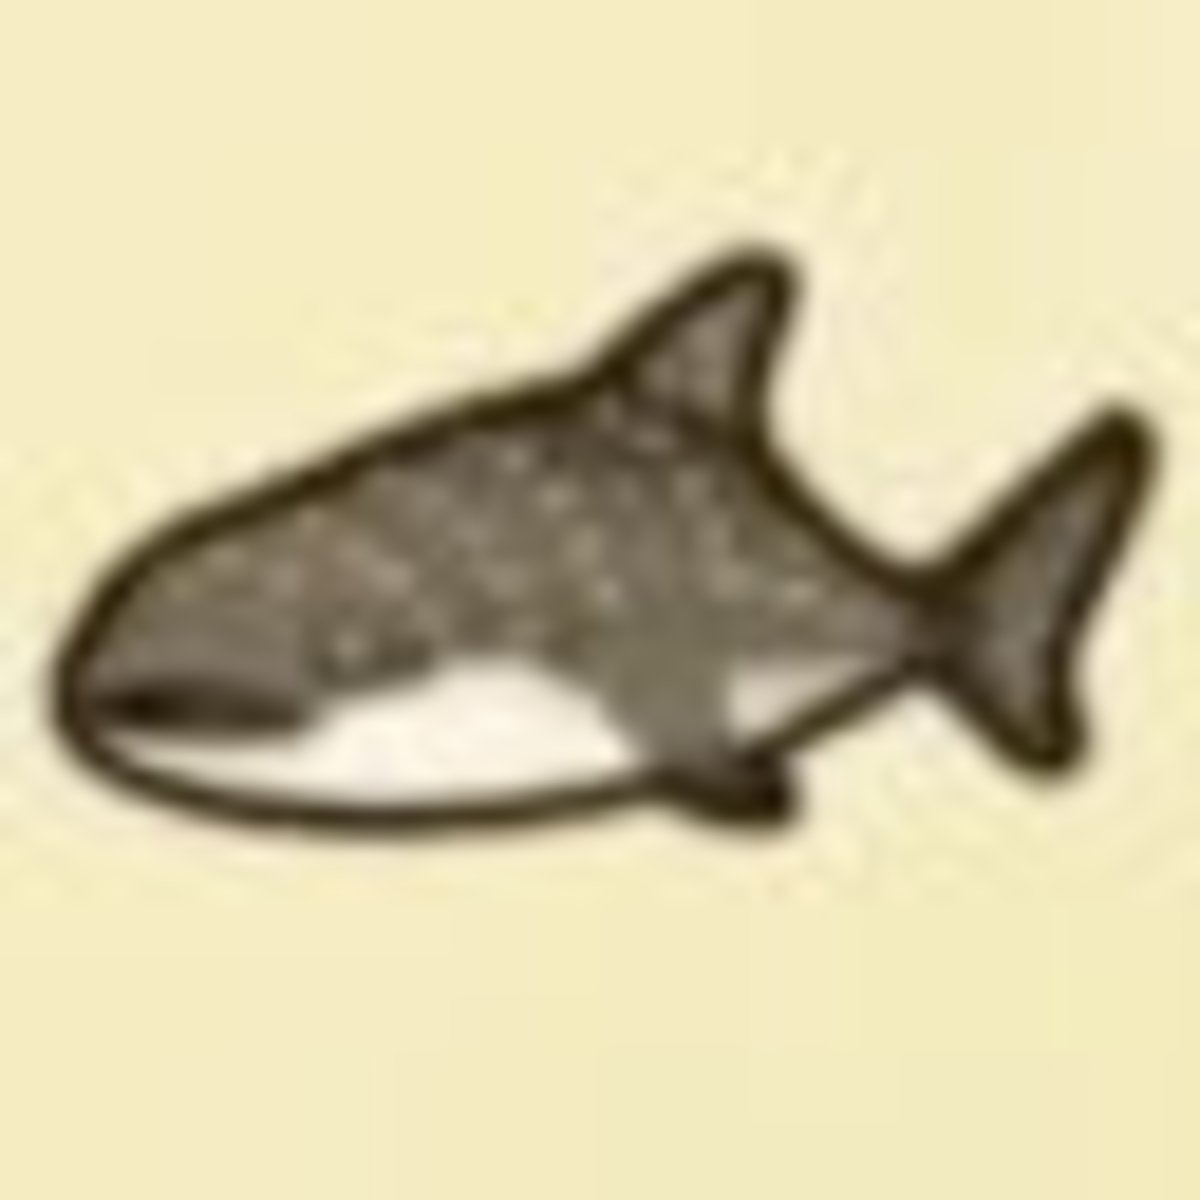 Tiburón ballena - Animal Crossing: New Horizons